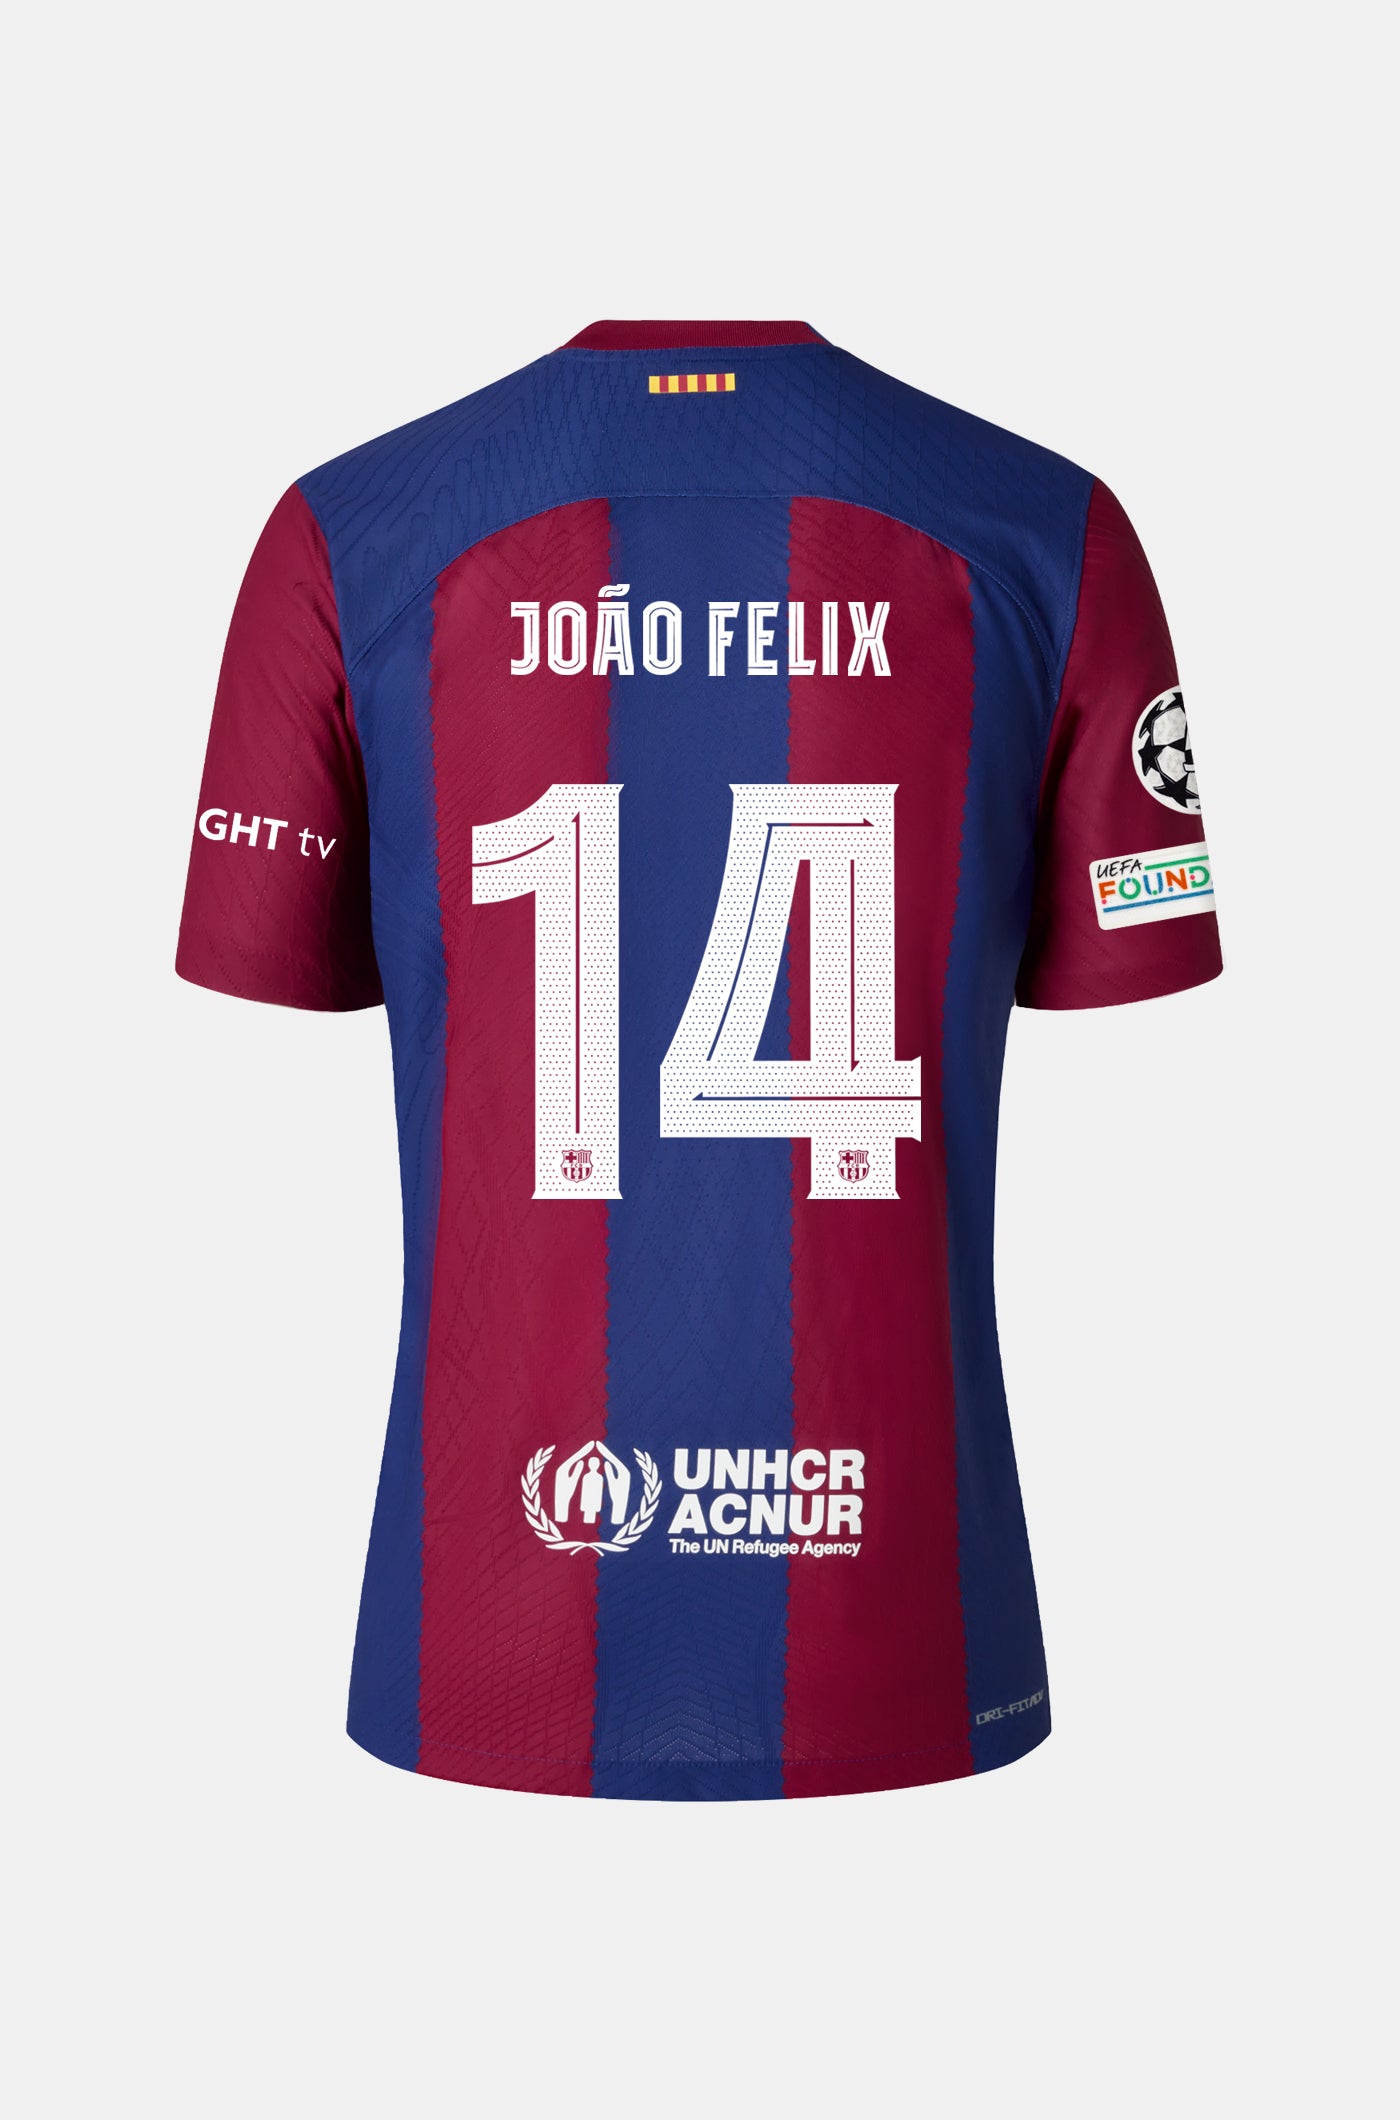 UCL FC Barcelona home shirt 23/24 - JOÃO FELIX